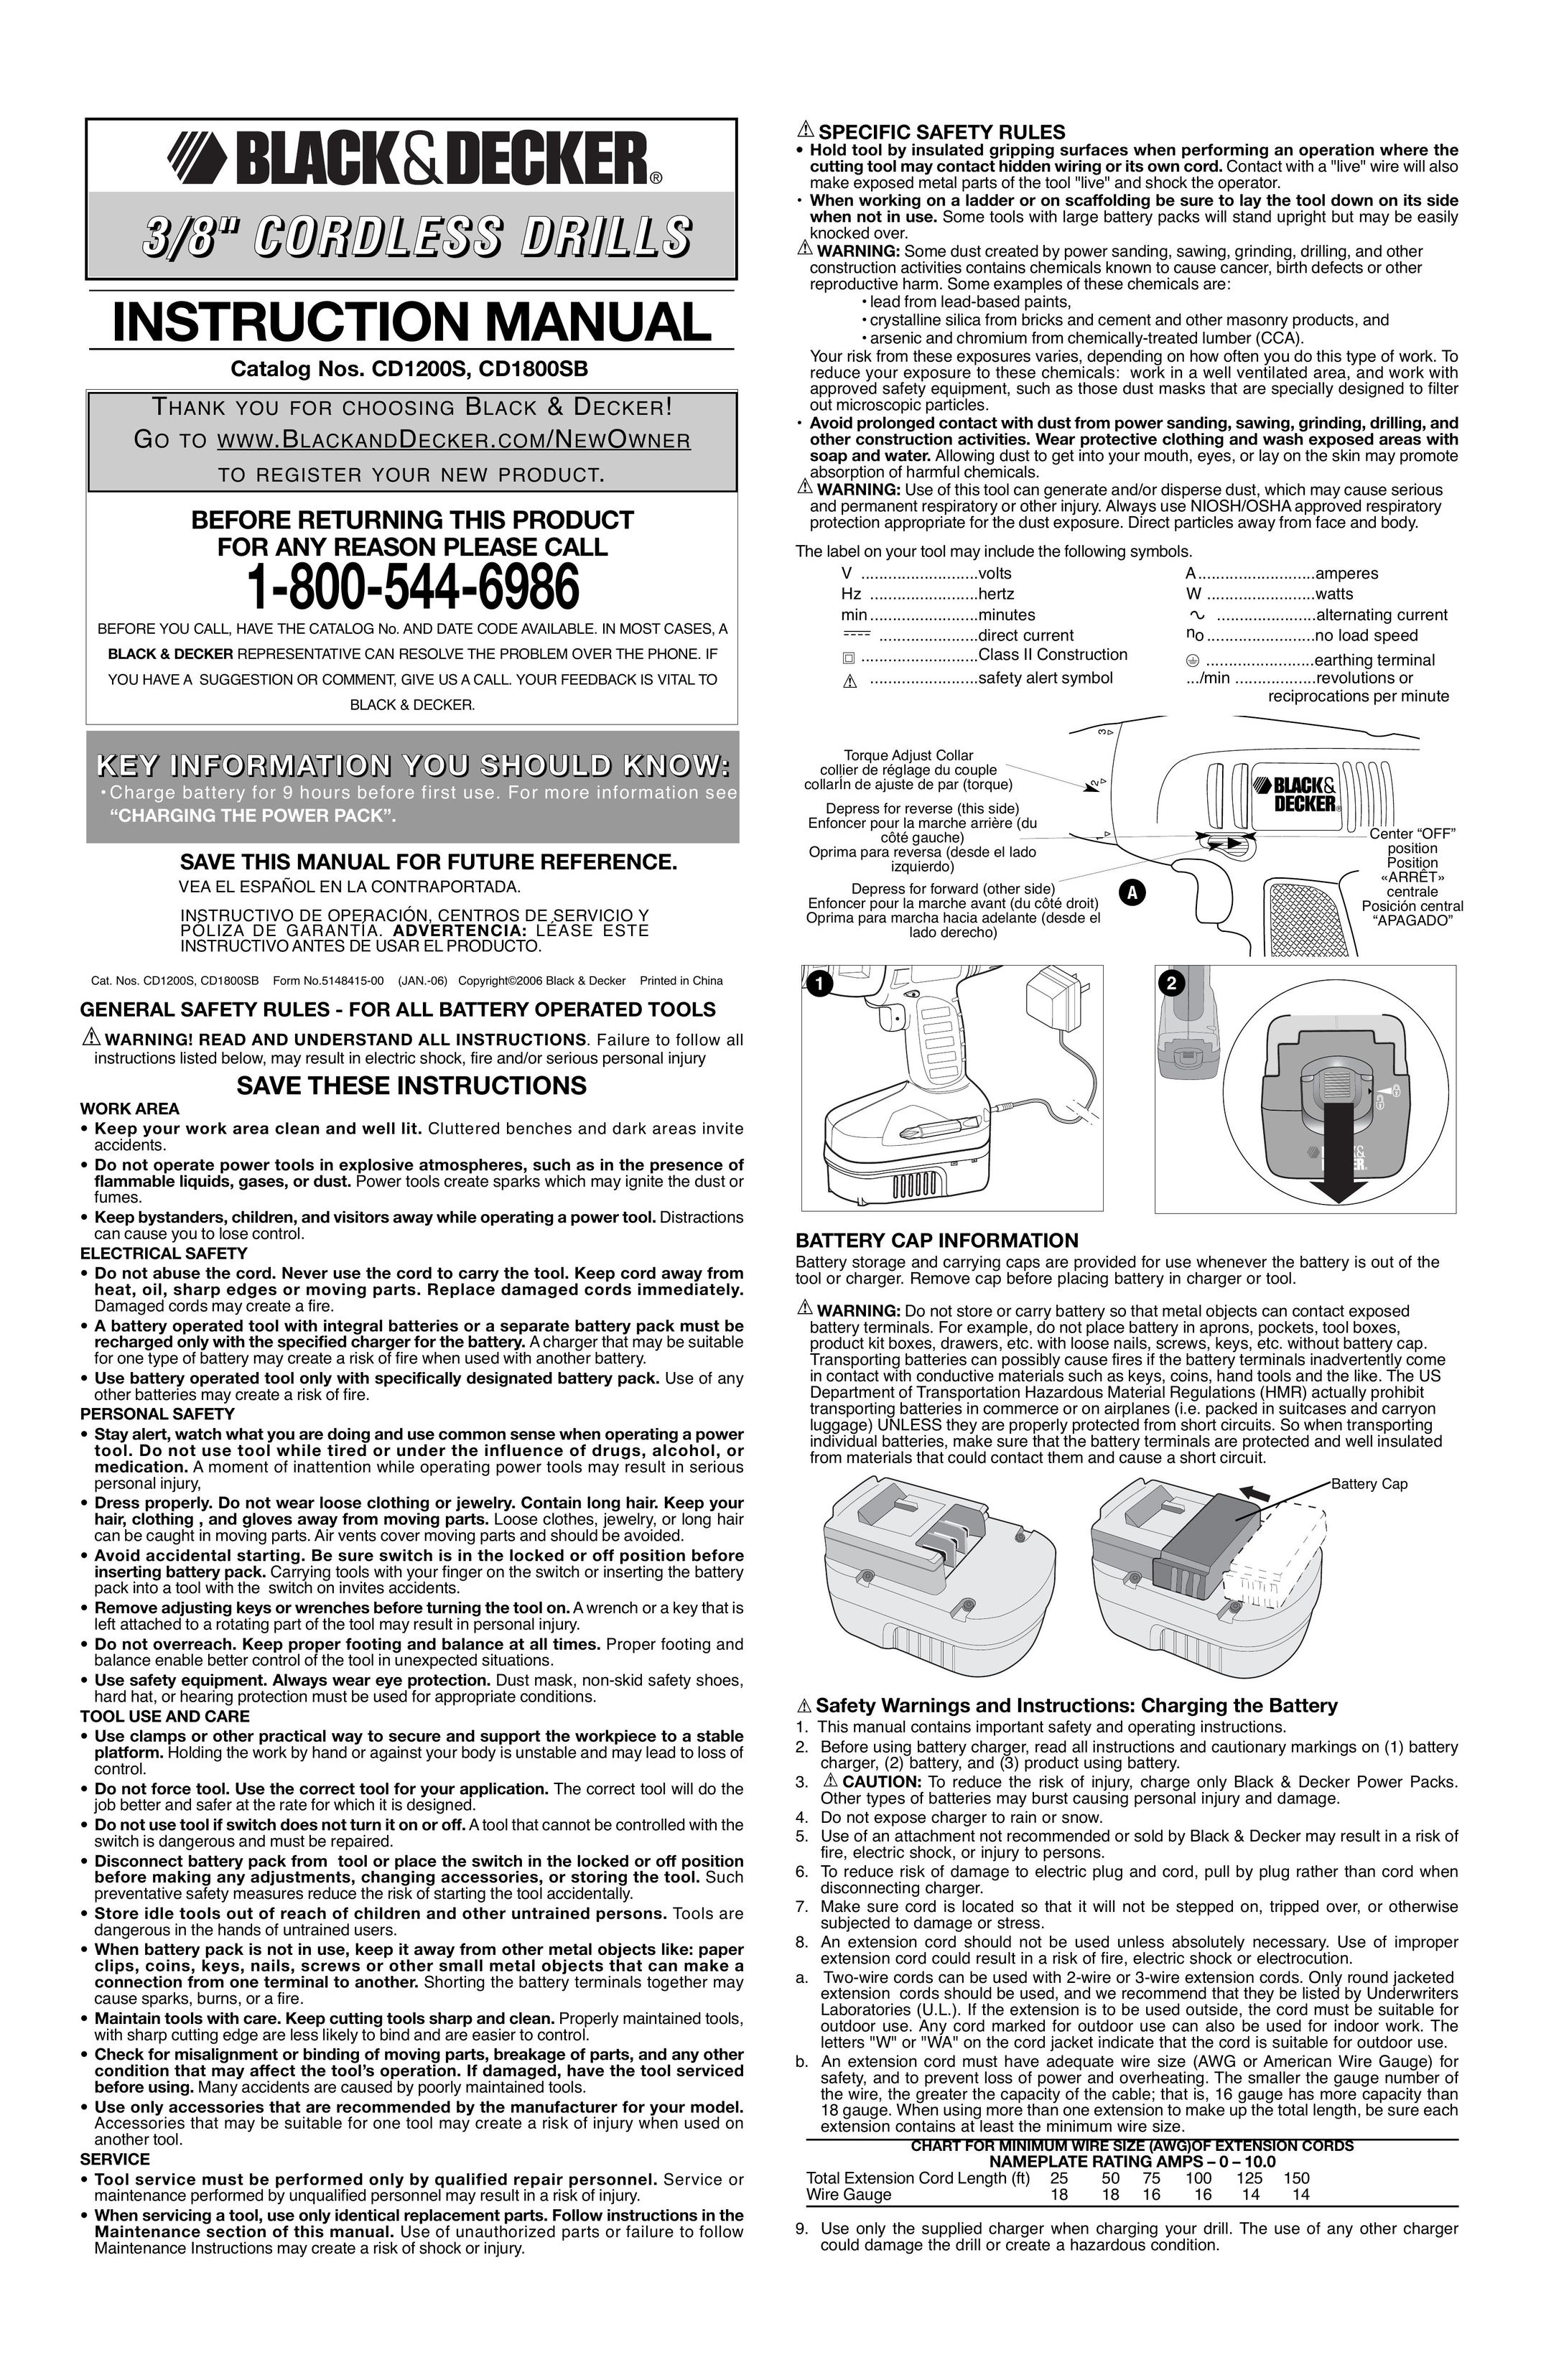 Black & Decker 5148415-00 Cordless Drill User Manual